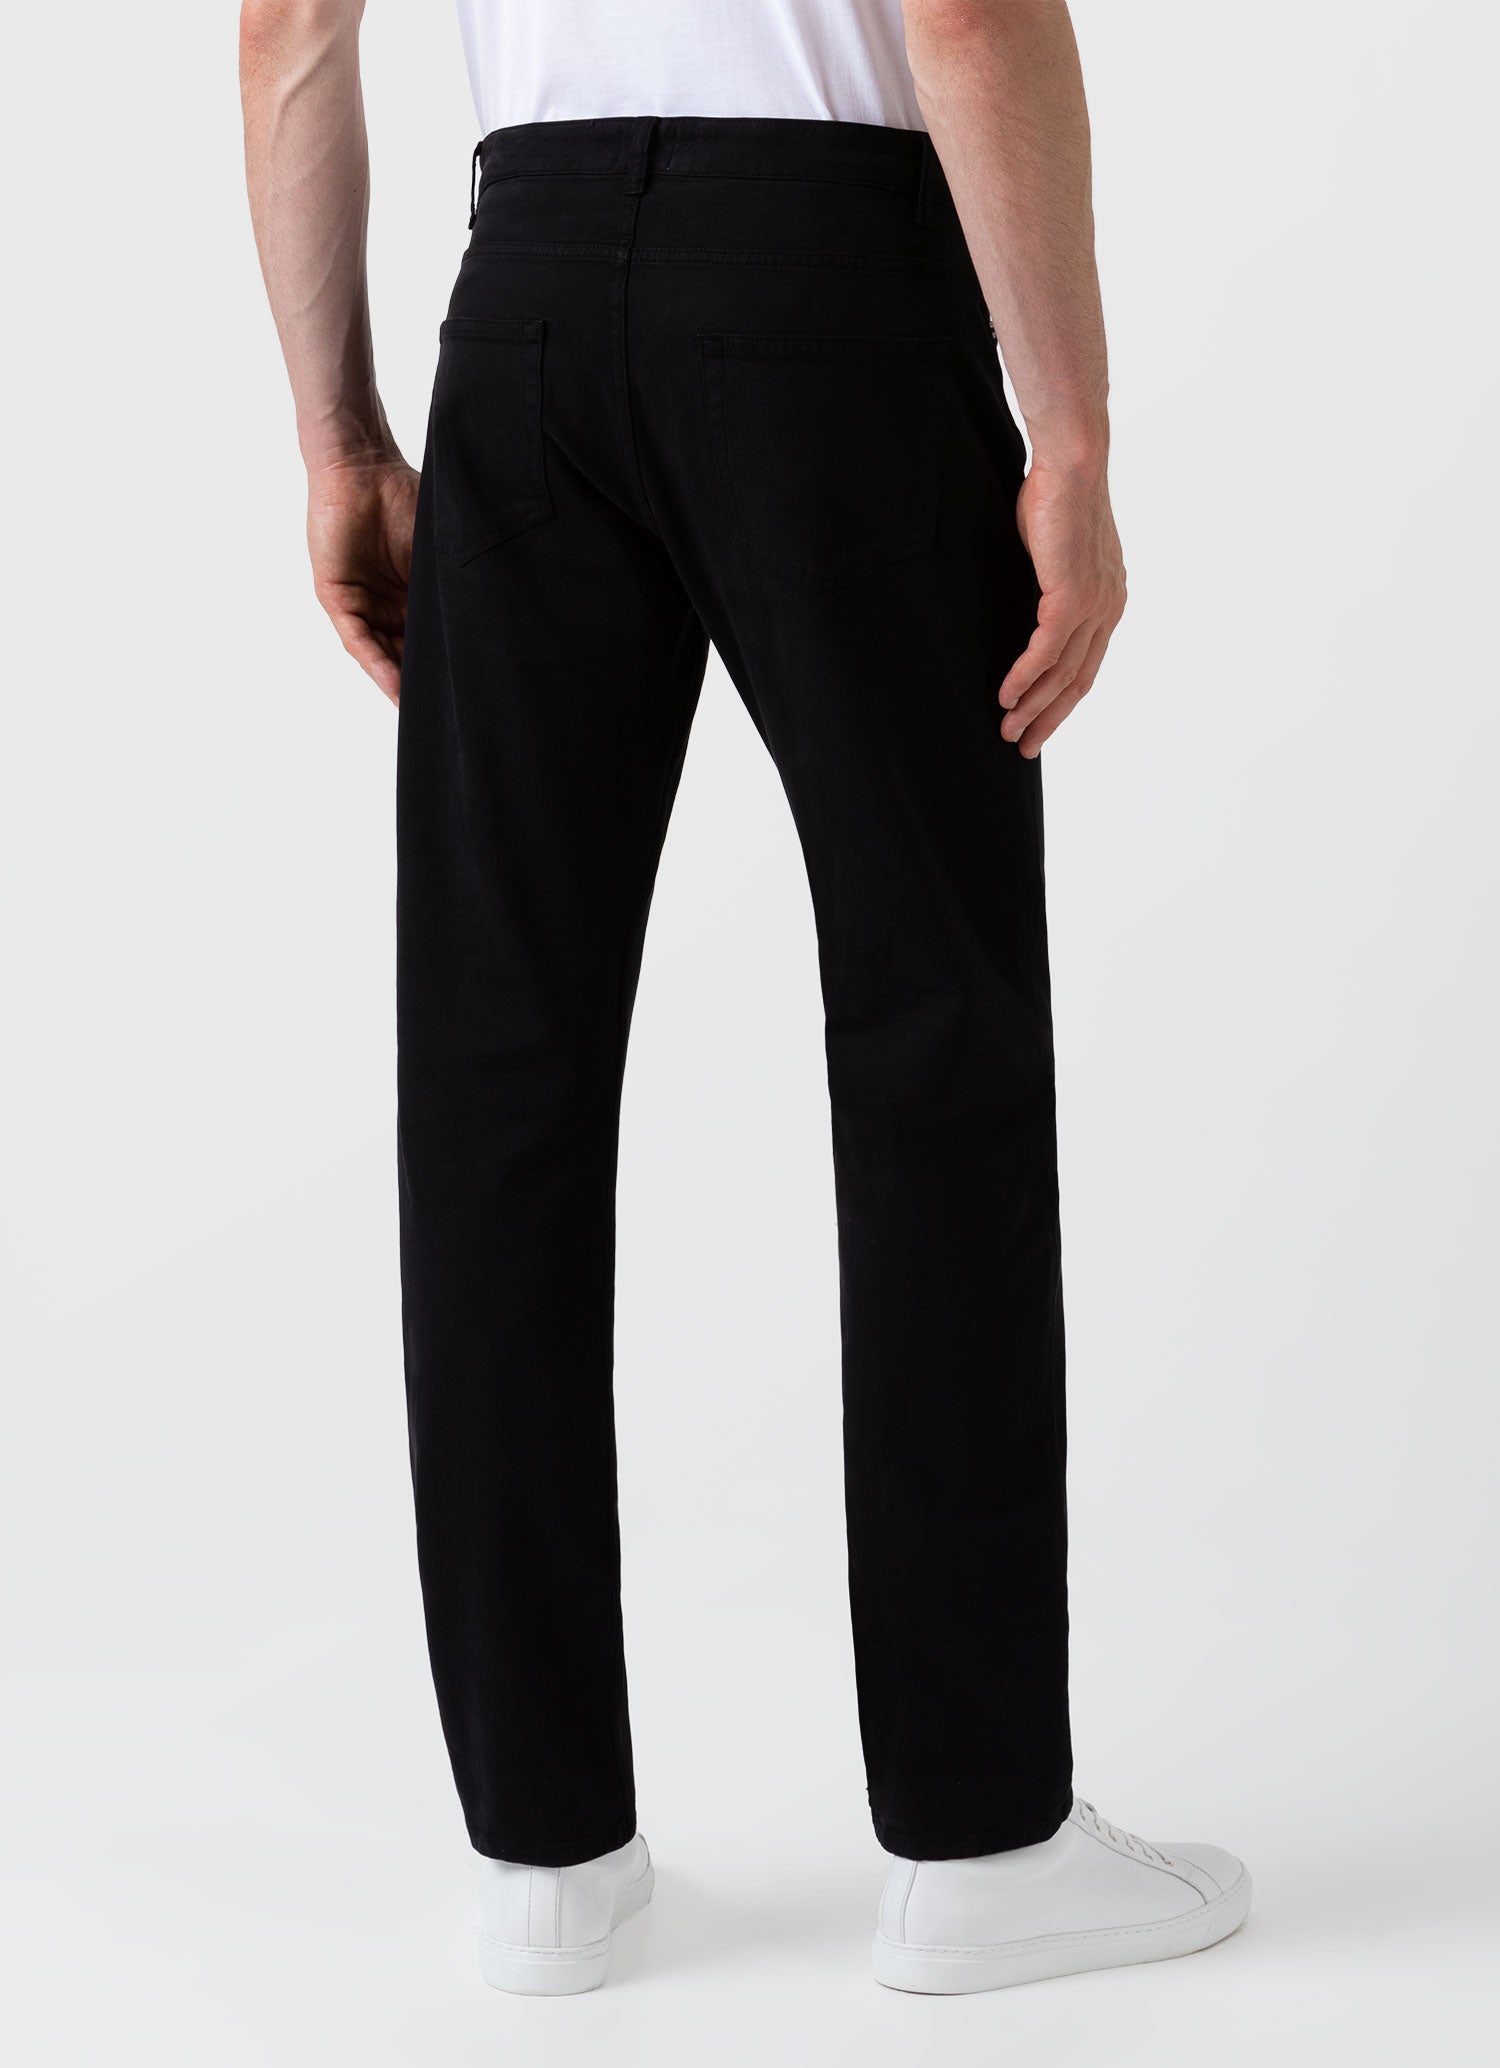 Men's Cotton Drill 5 Pocket Trouser in Black